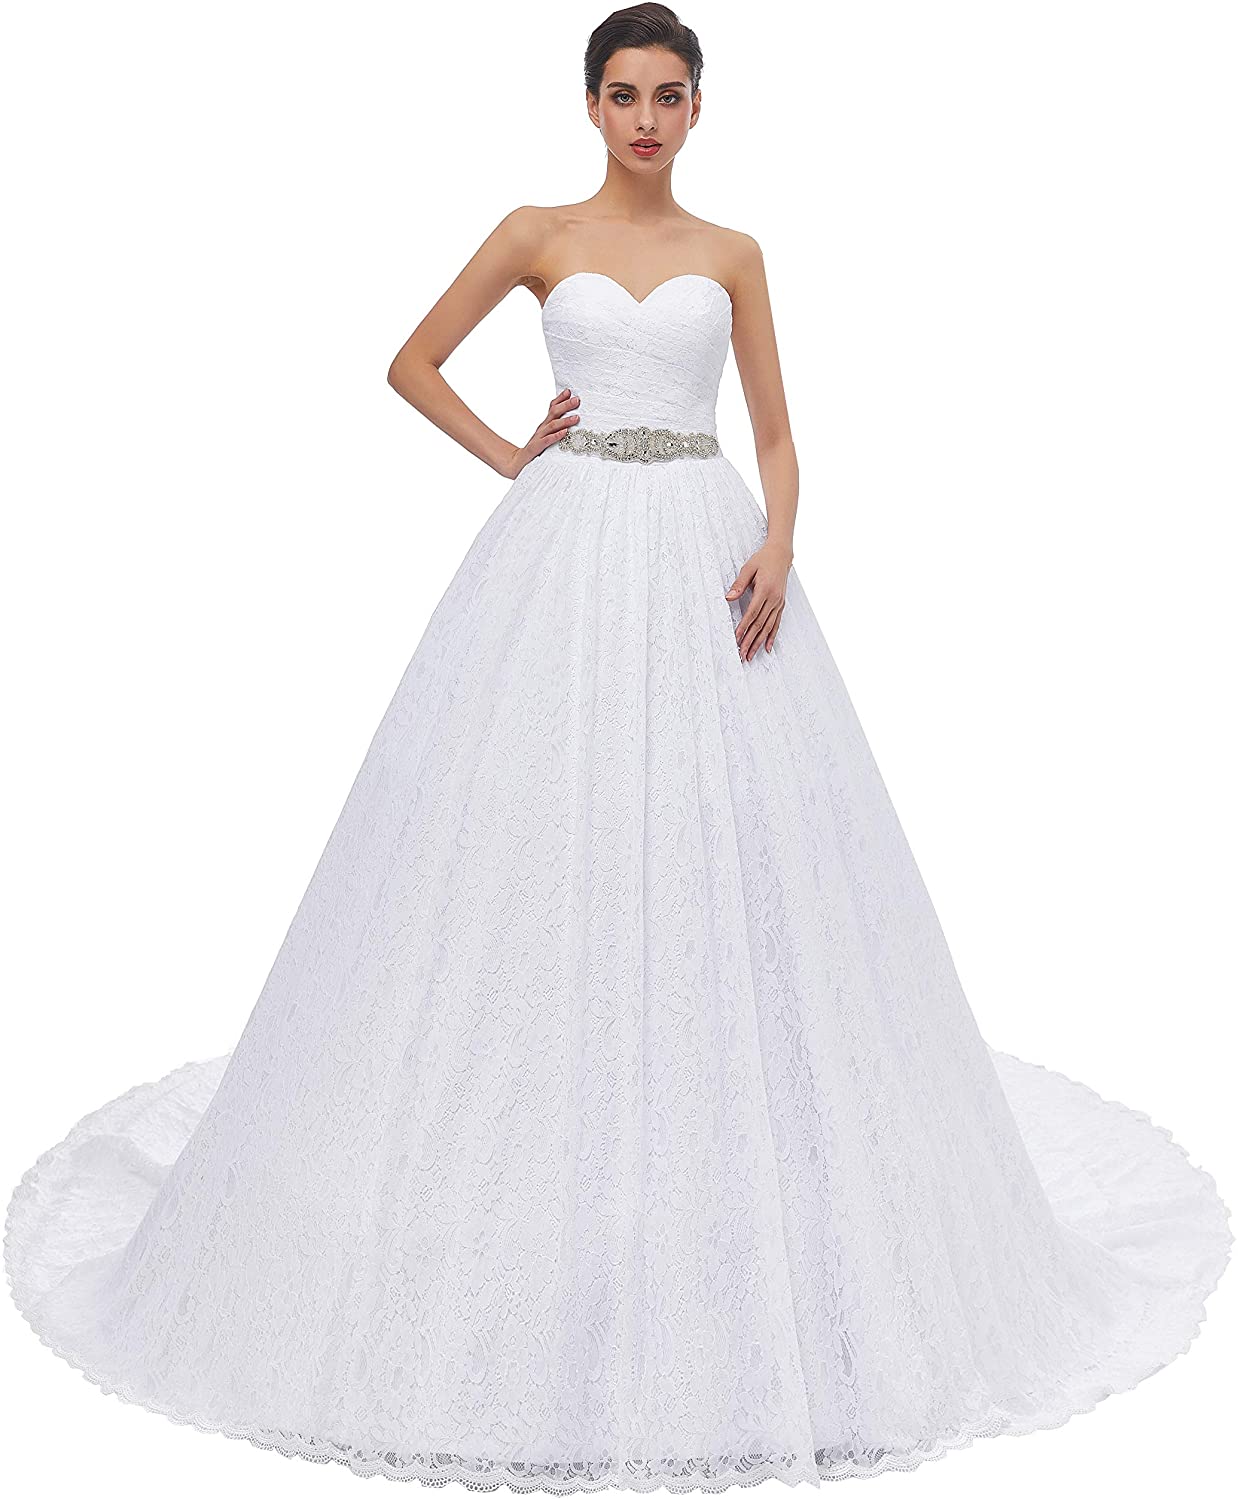 Likedpage Women's Lace Mermaid Bridal Wedding Dresses 